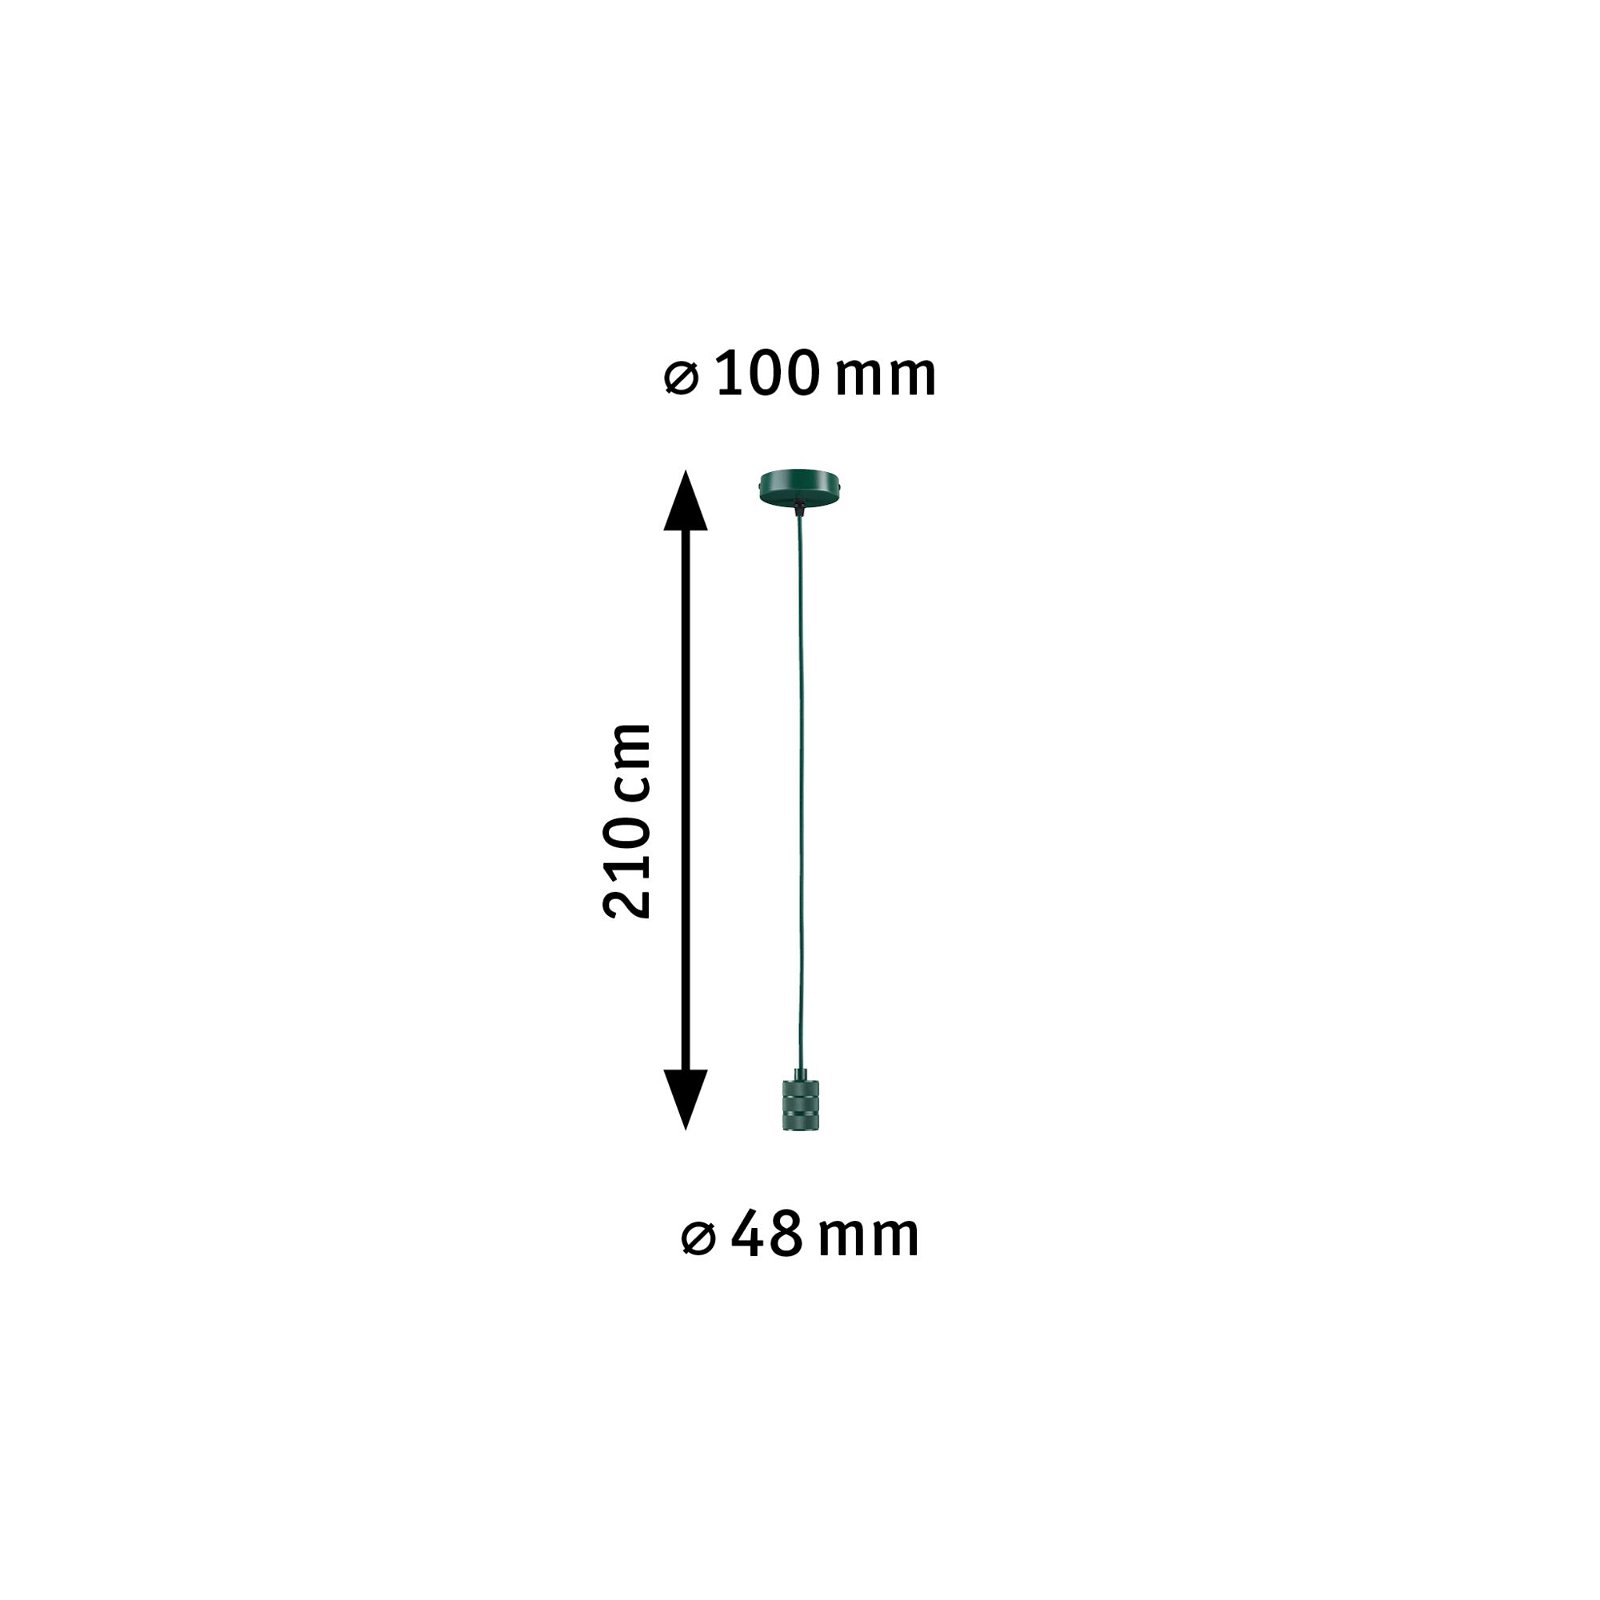 Neordic Pendant luminaire Tilla E27 max. 60W Green dimmable Metal